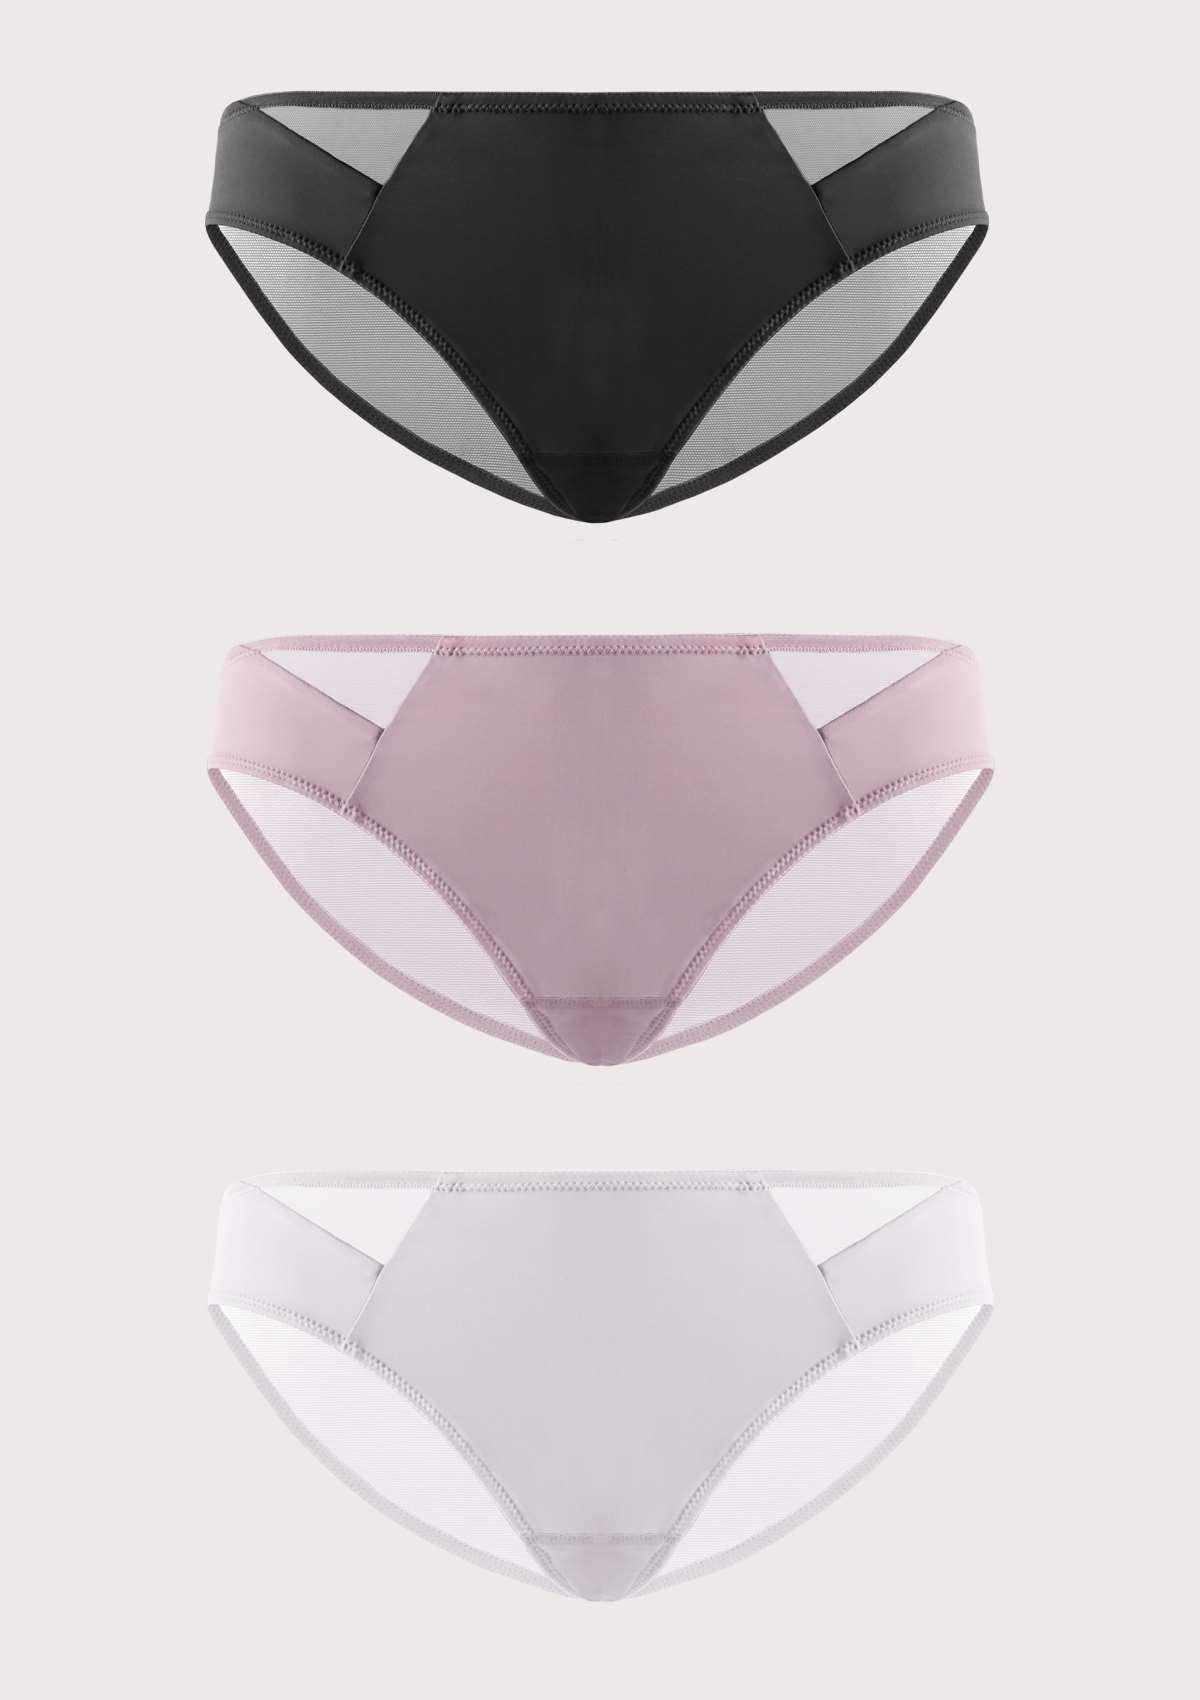 HSIA Geometric Breathable Soft Everyday Bikini Panties 3 Pack - XL / Black+Purple+Pink